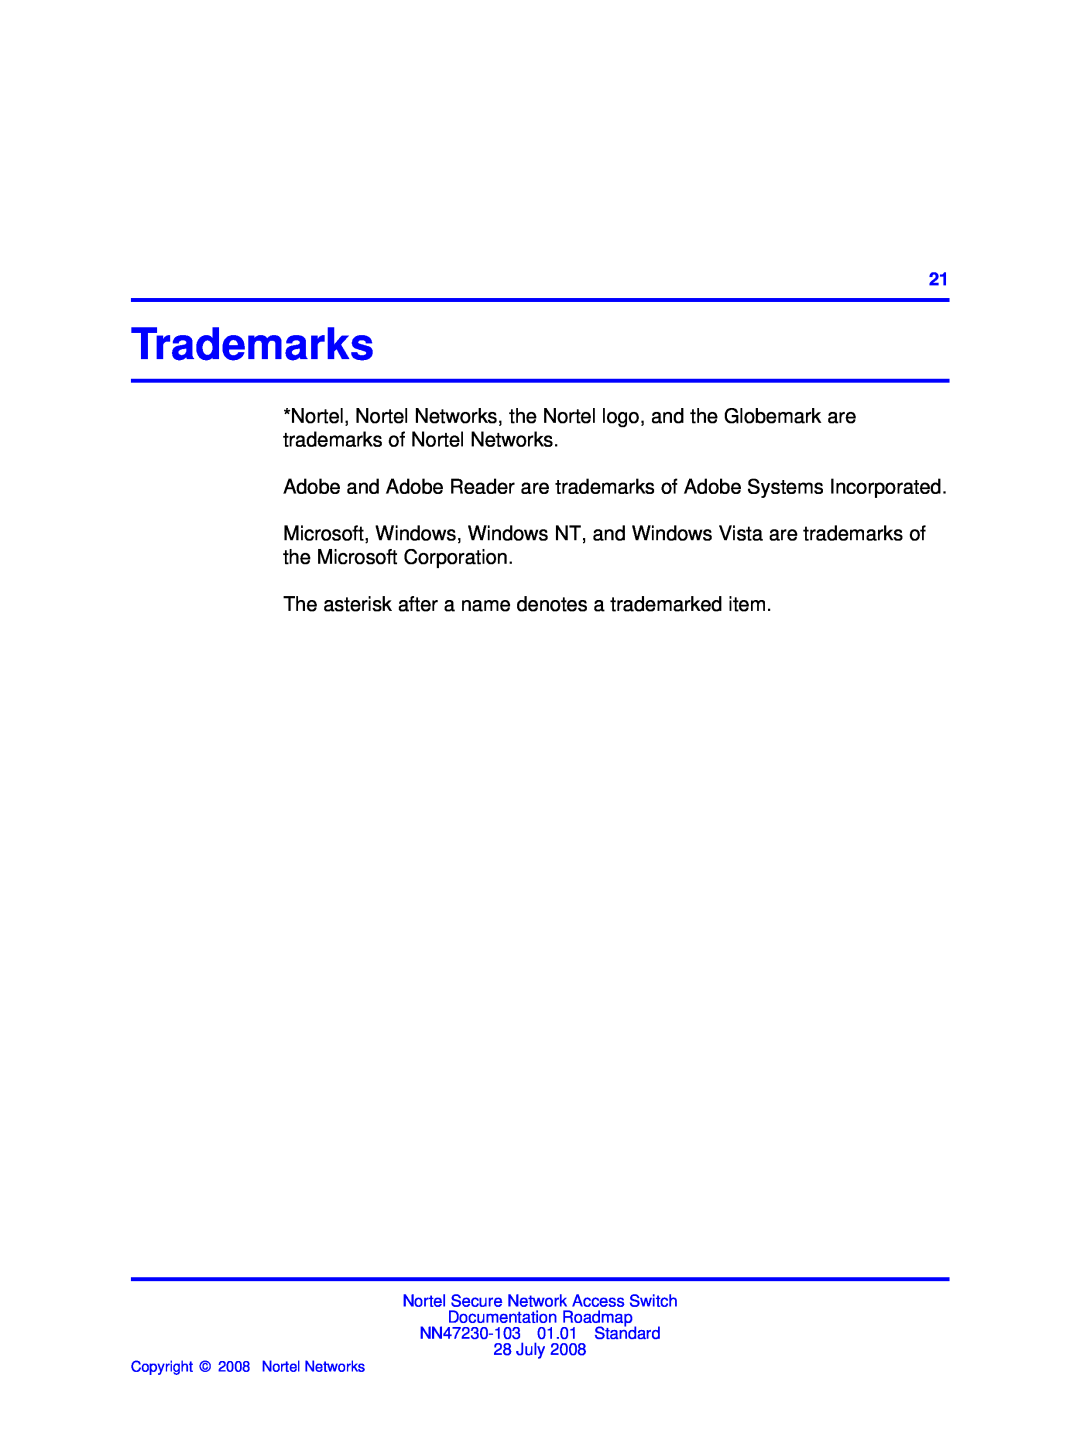 Nortel Networks NN47230-103 manual Trademarks 